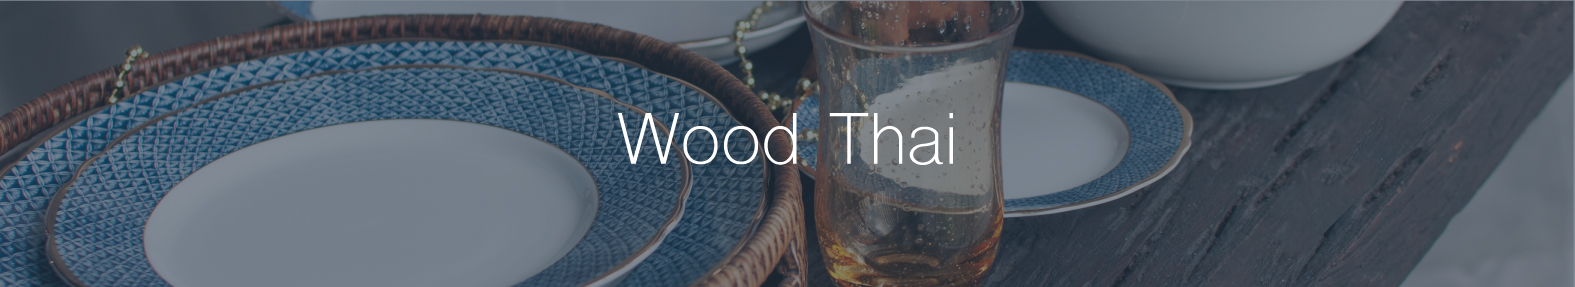 Broadcrumb-Wood-Thai